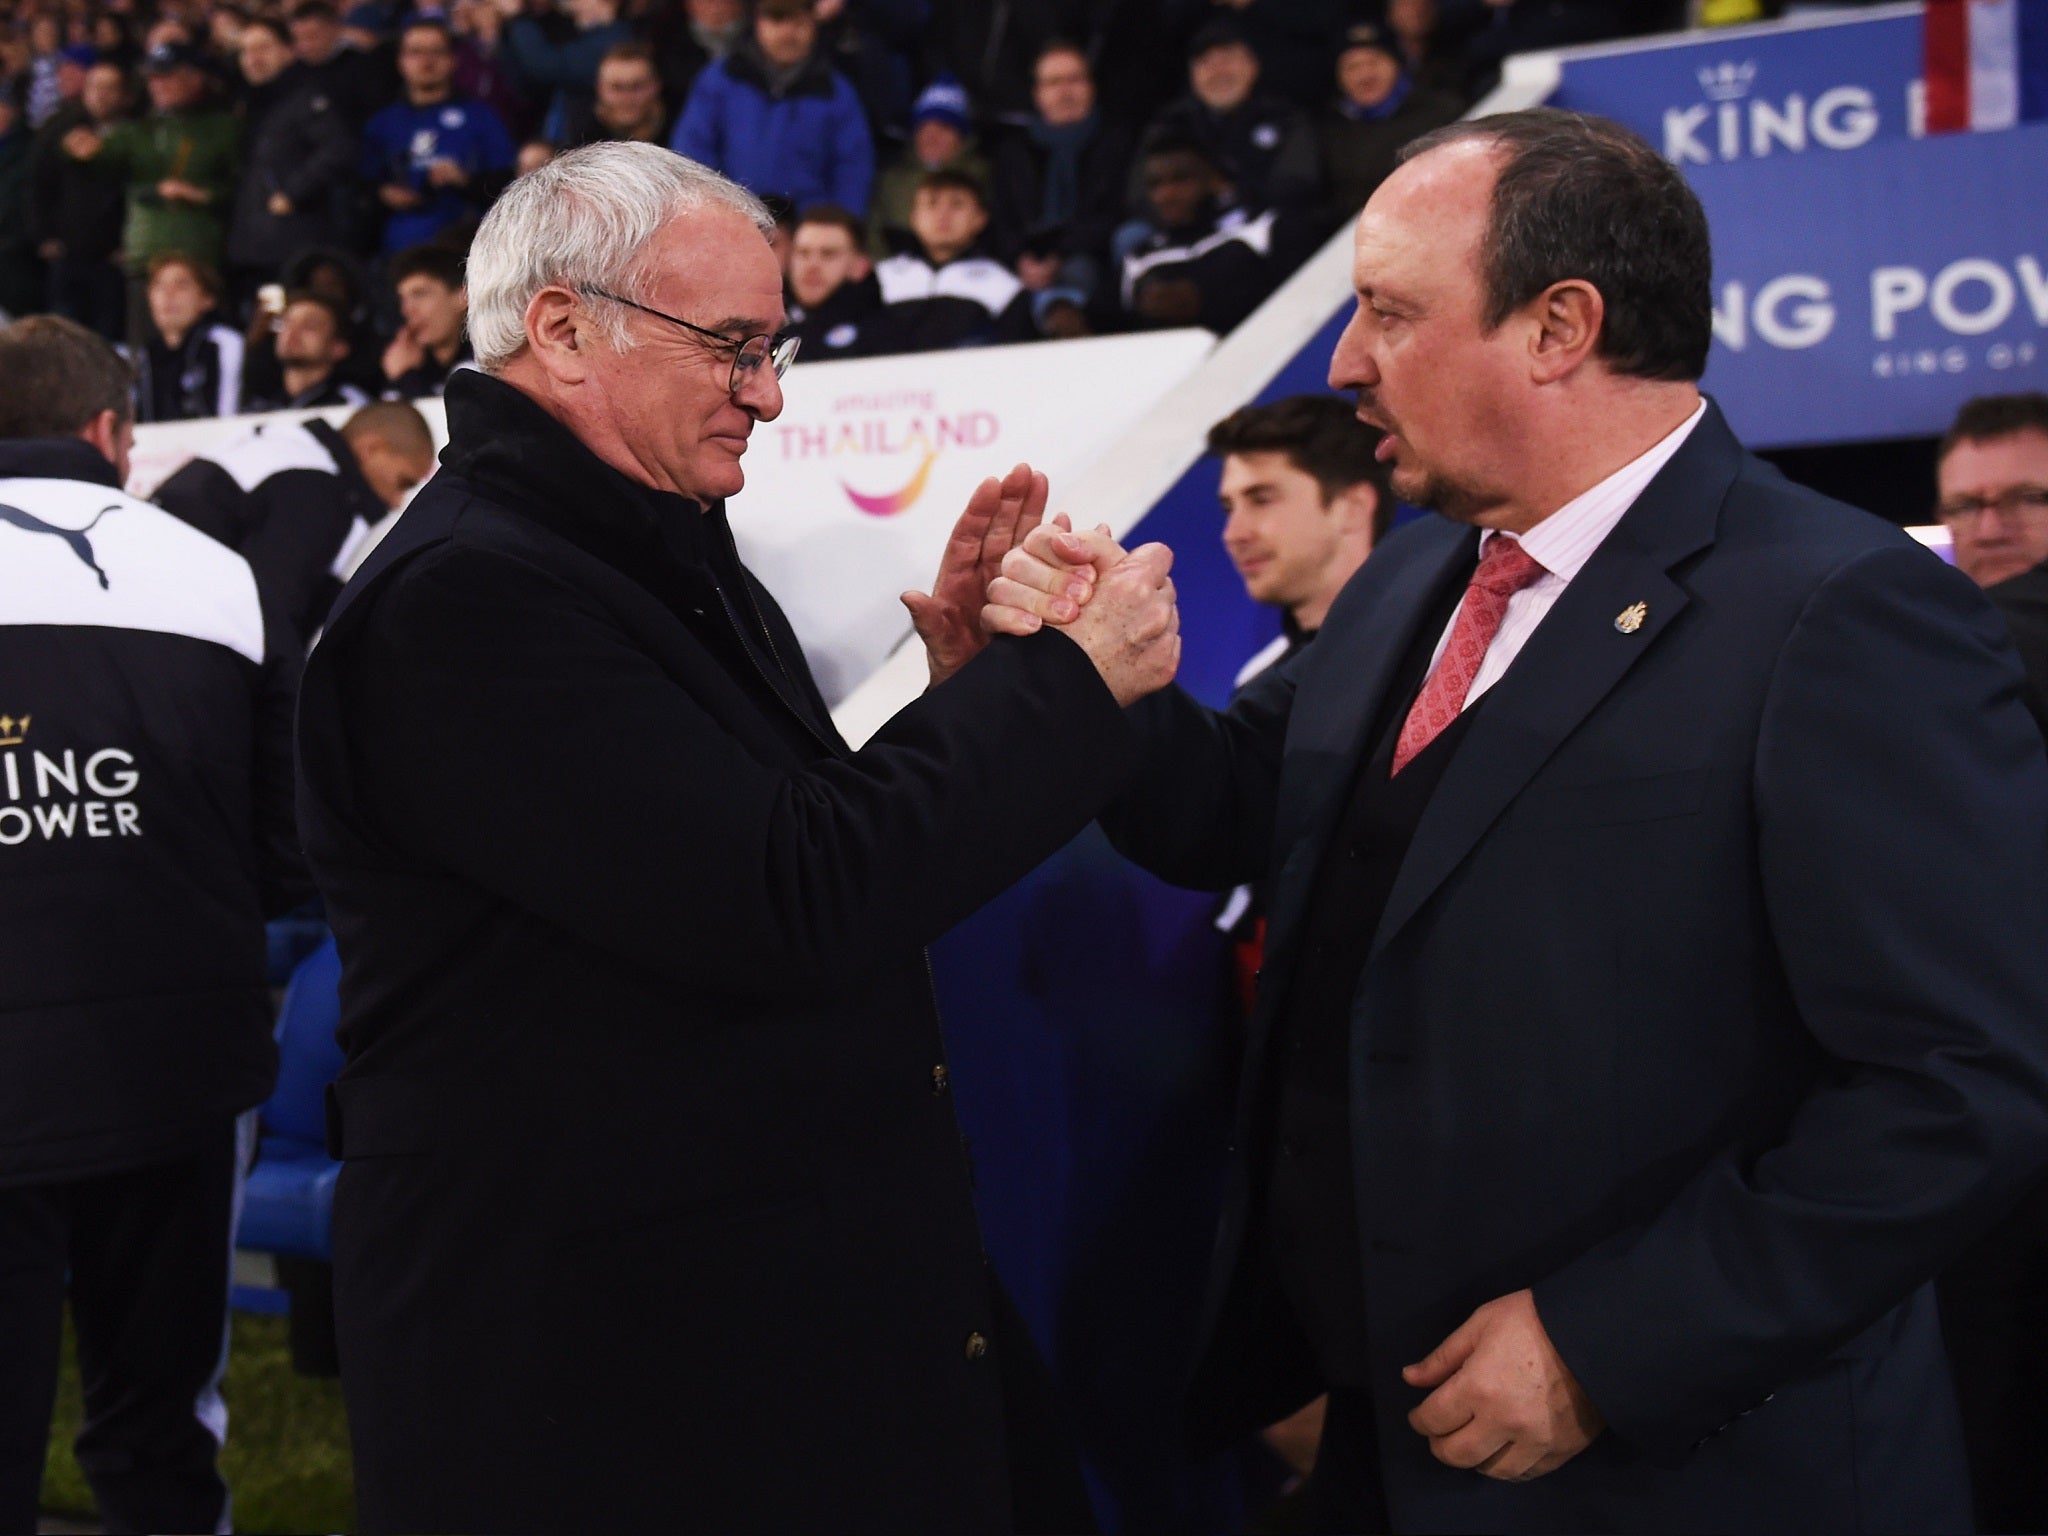 Rafael Benitez and Claudio Ranieri greet each other